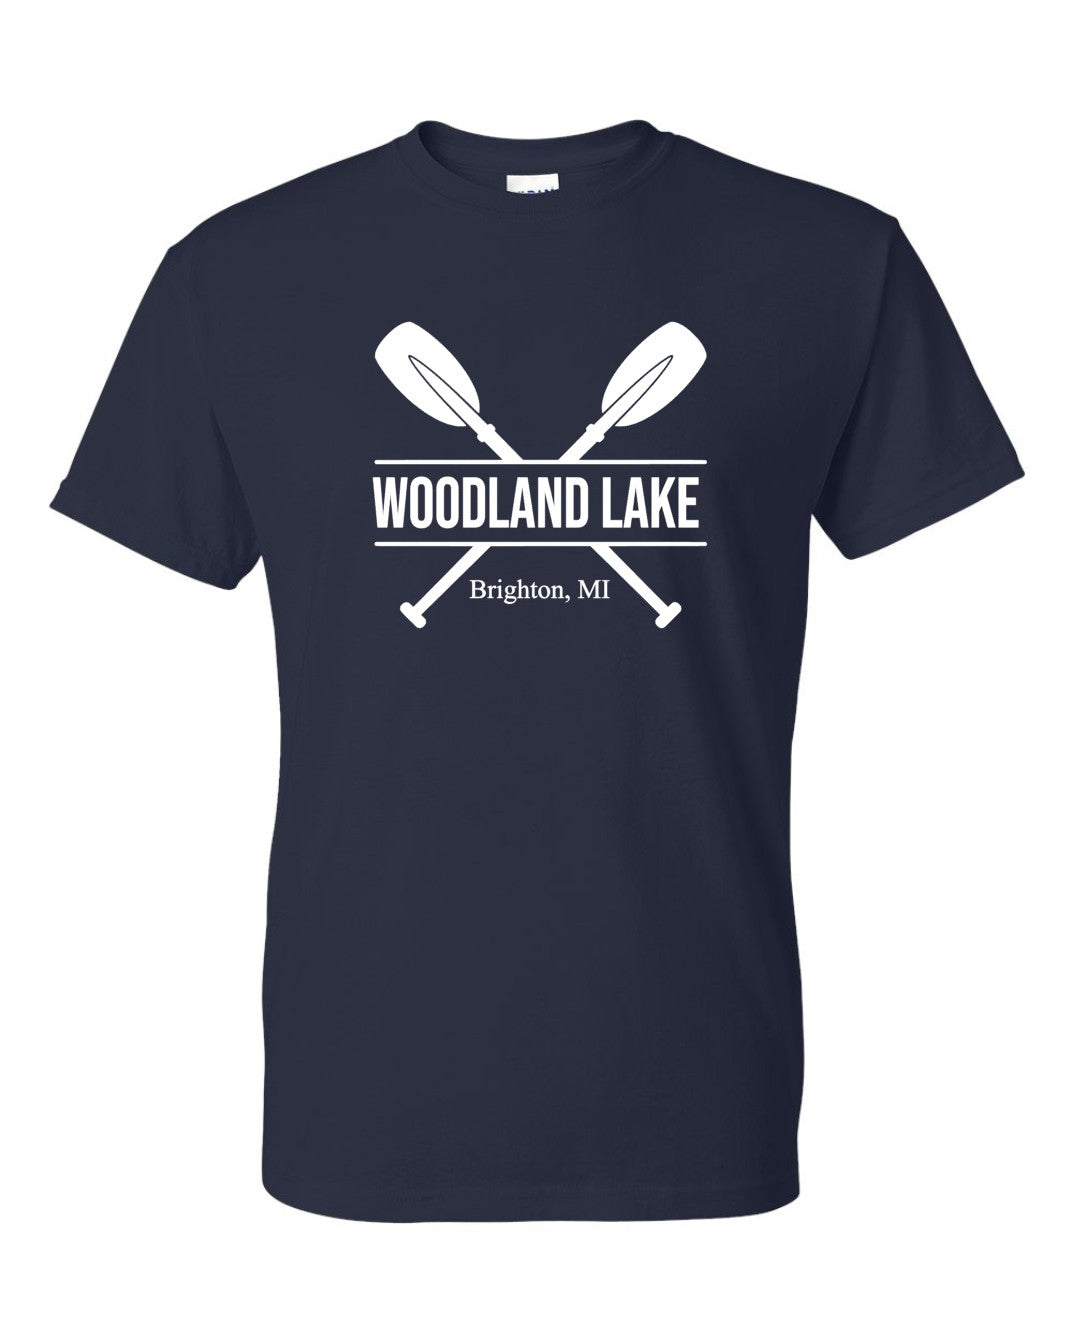 Woodland Lake Split Oars Tee